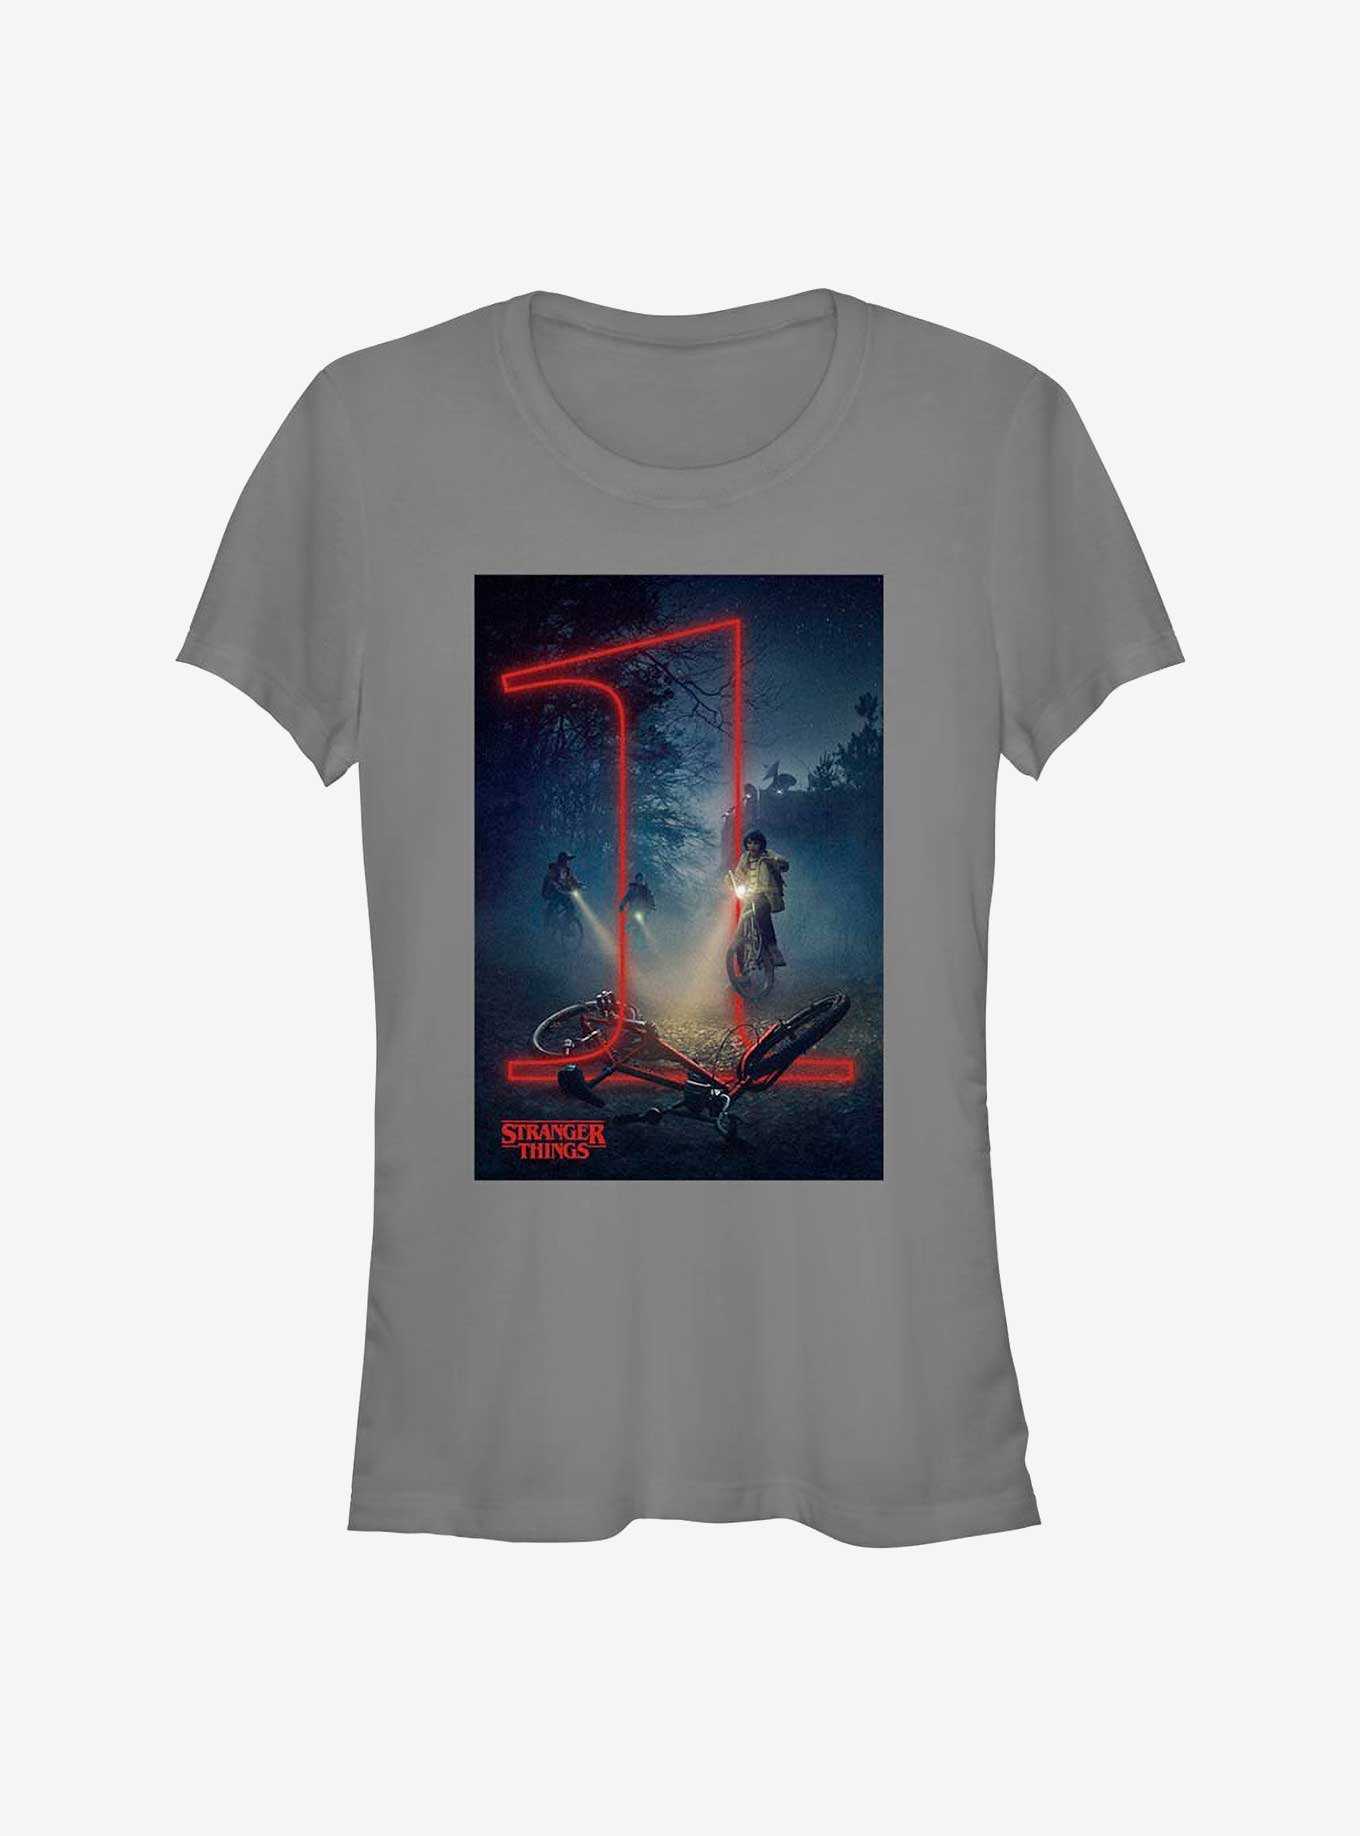 Stranger Things Season 1 Poster Girl's T-Shirt, , hi-res